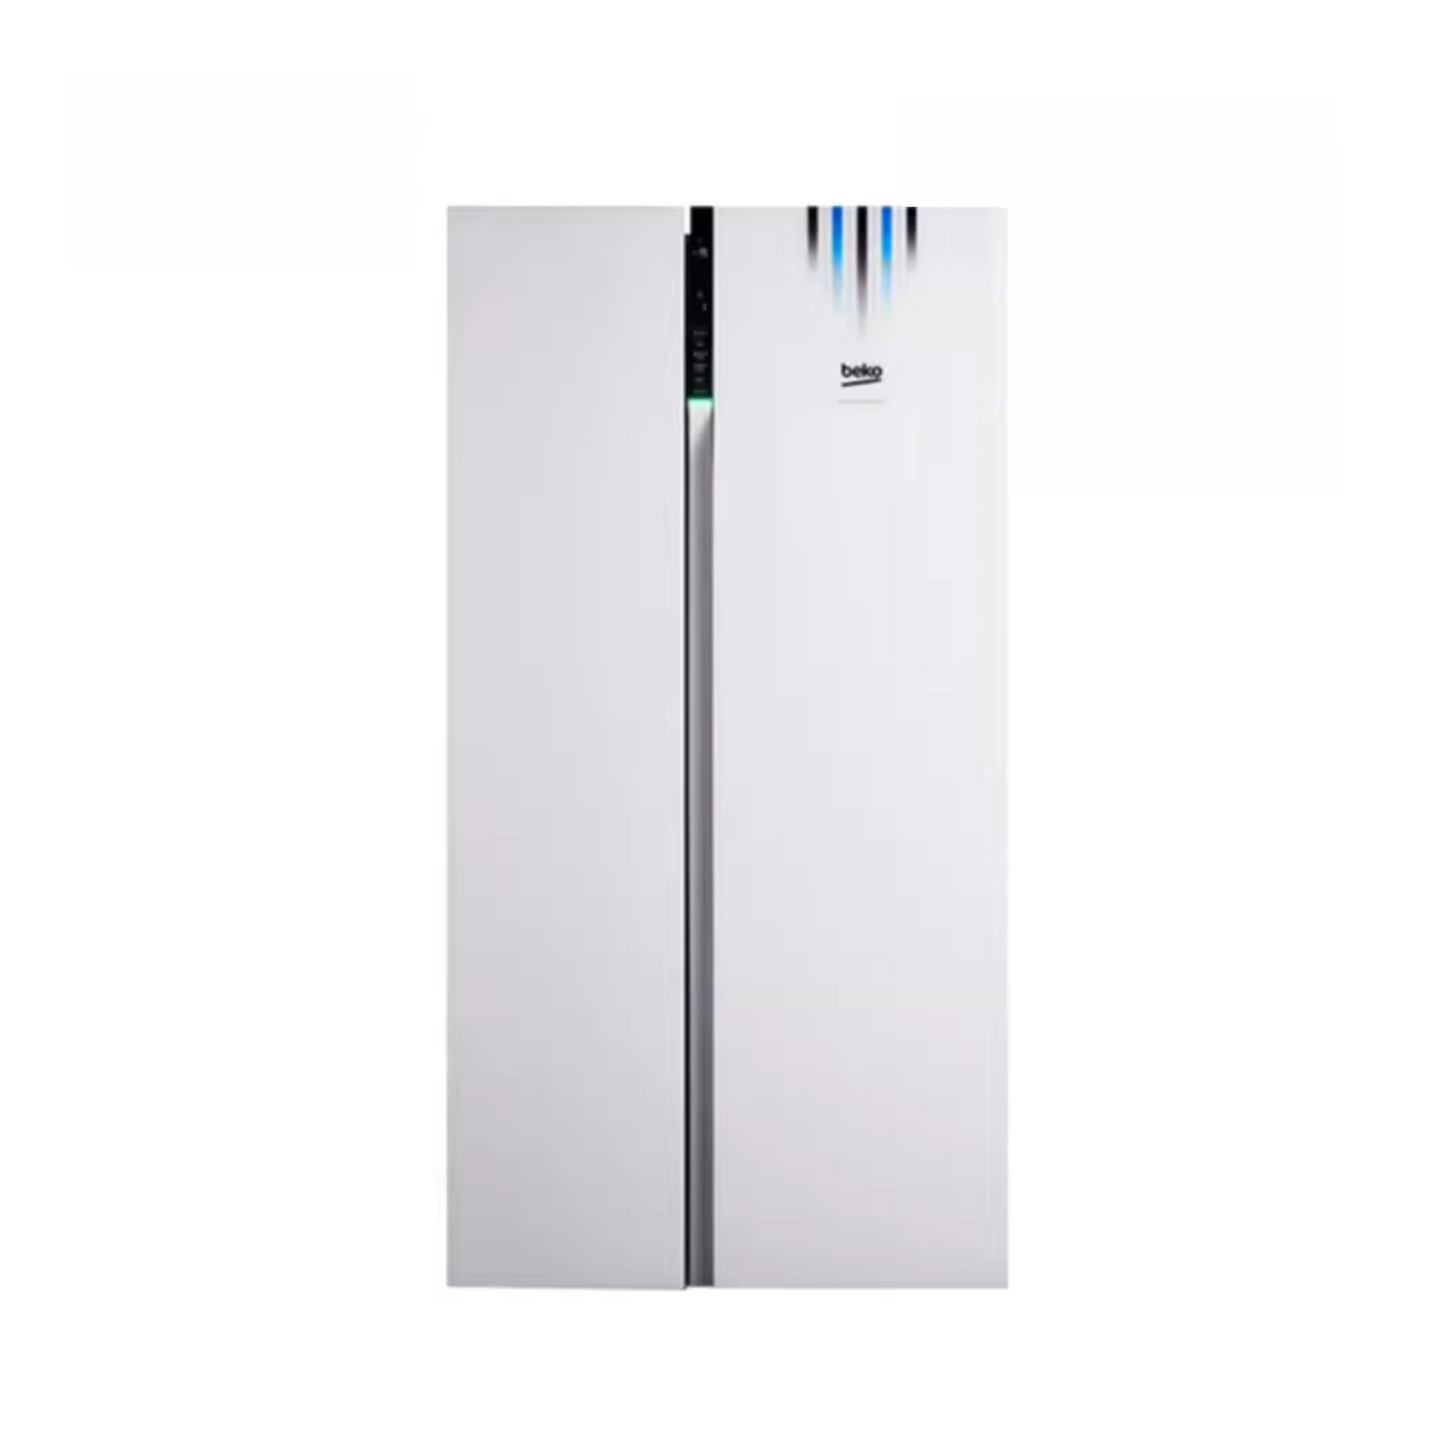 Beko 580L Side by Side Refrigerator, GN163120ZIG-IM